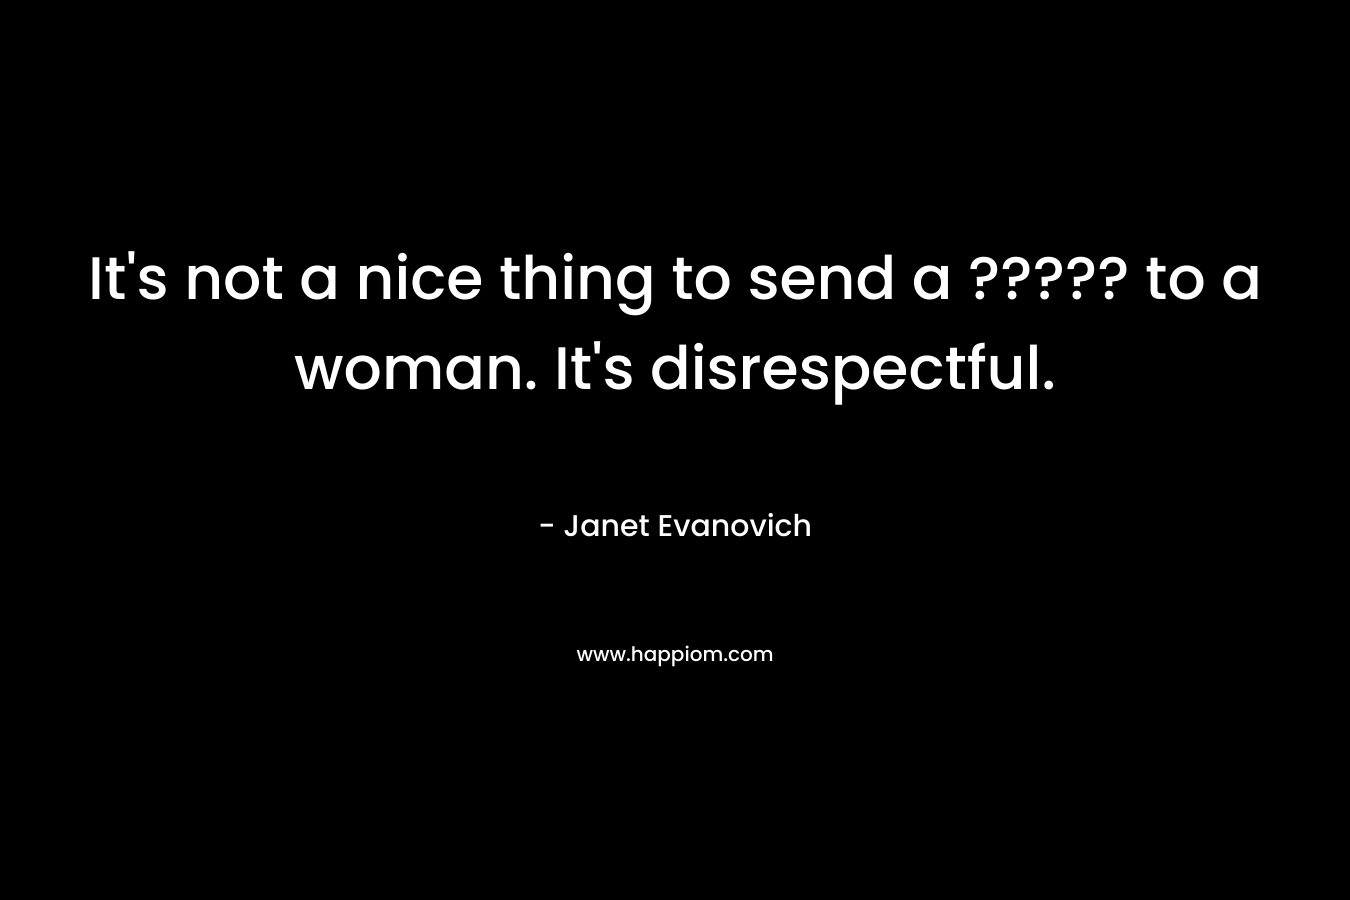 It's not a nice thing to send a ????? to a woman. It's disrespectful.